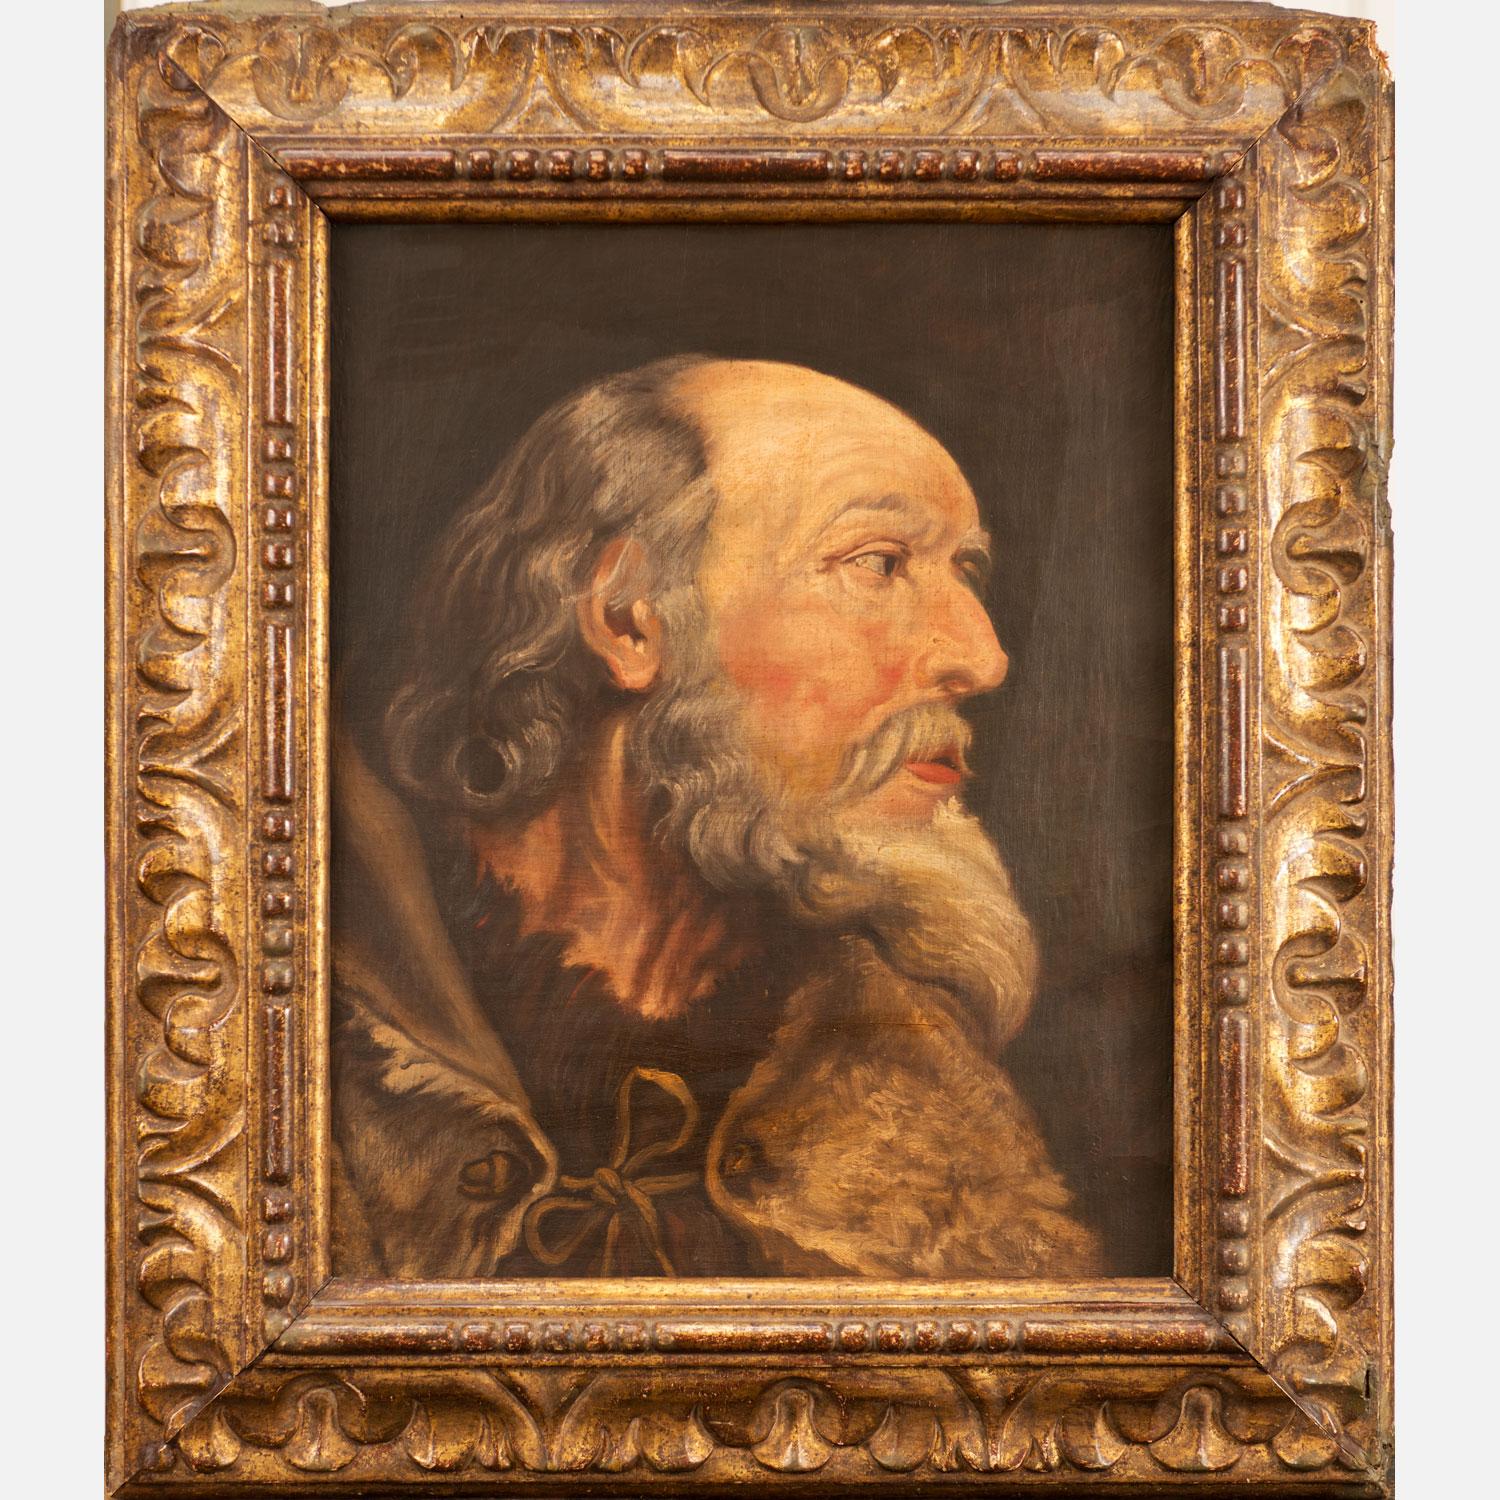 Peter Paul Rubens (1577-1640)-follower